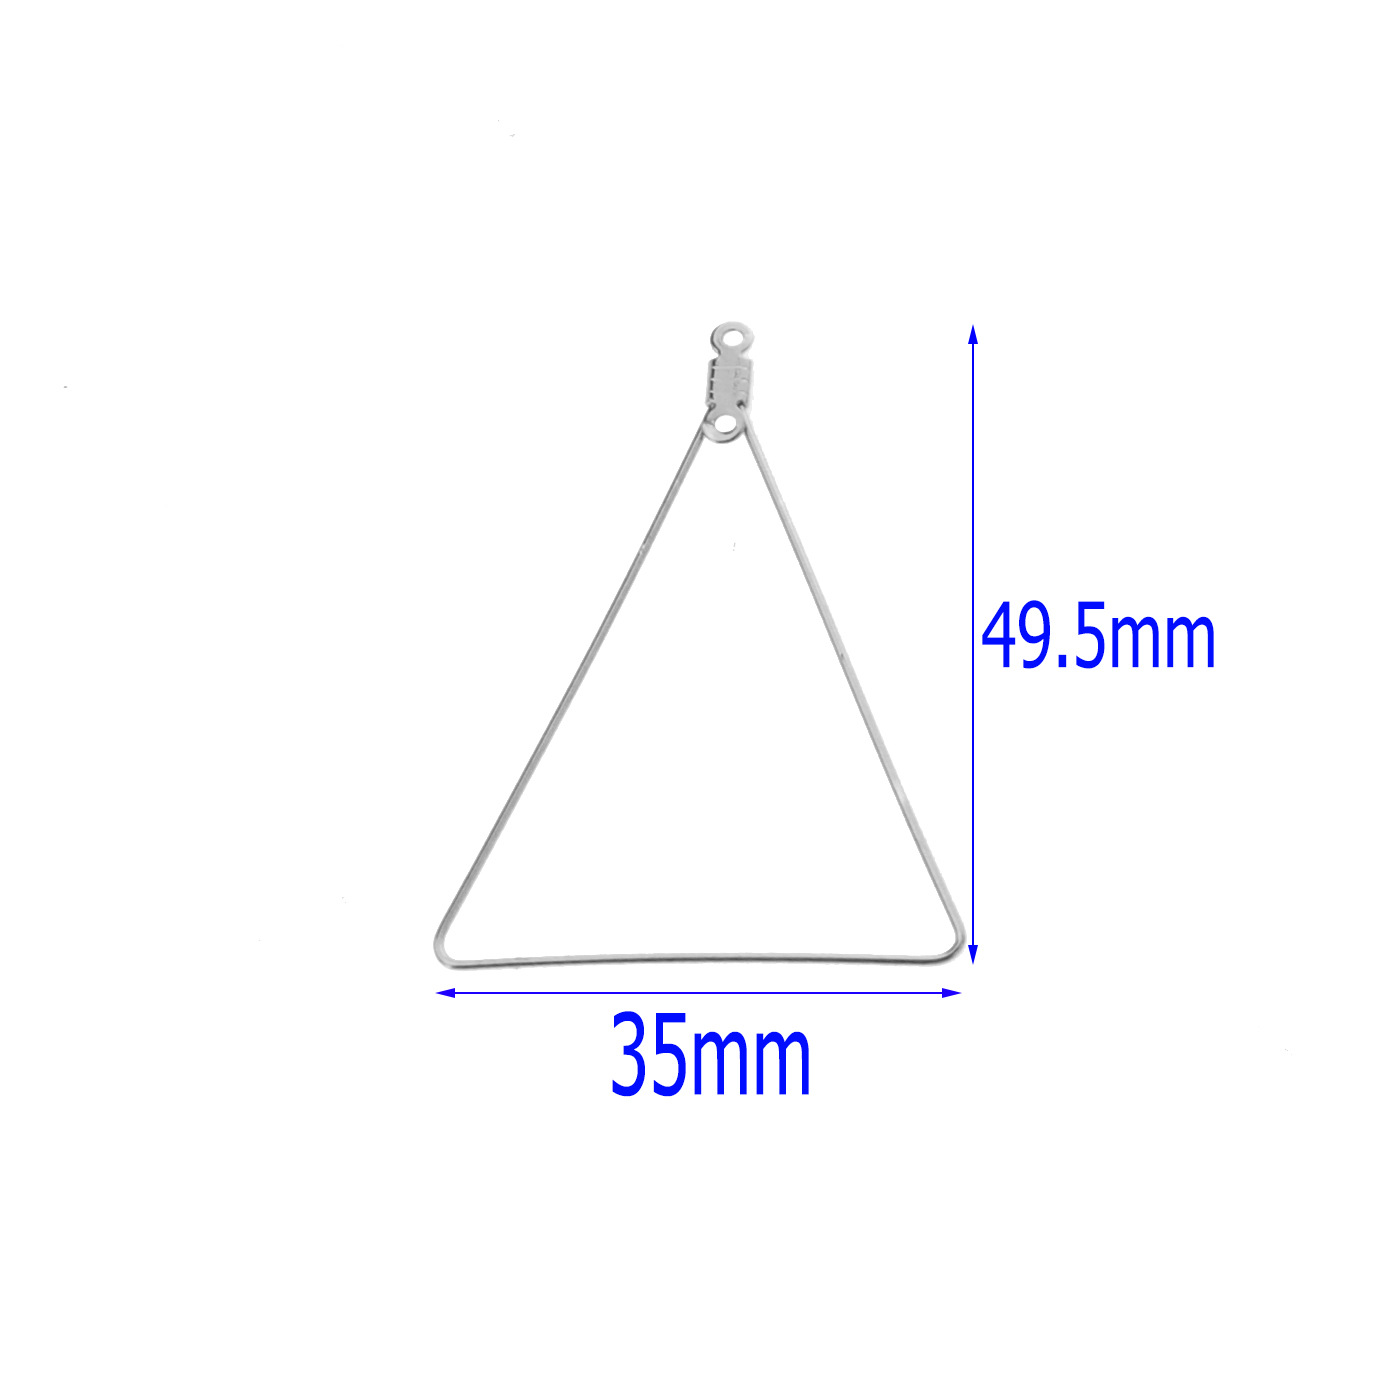 4:Triangular steel color